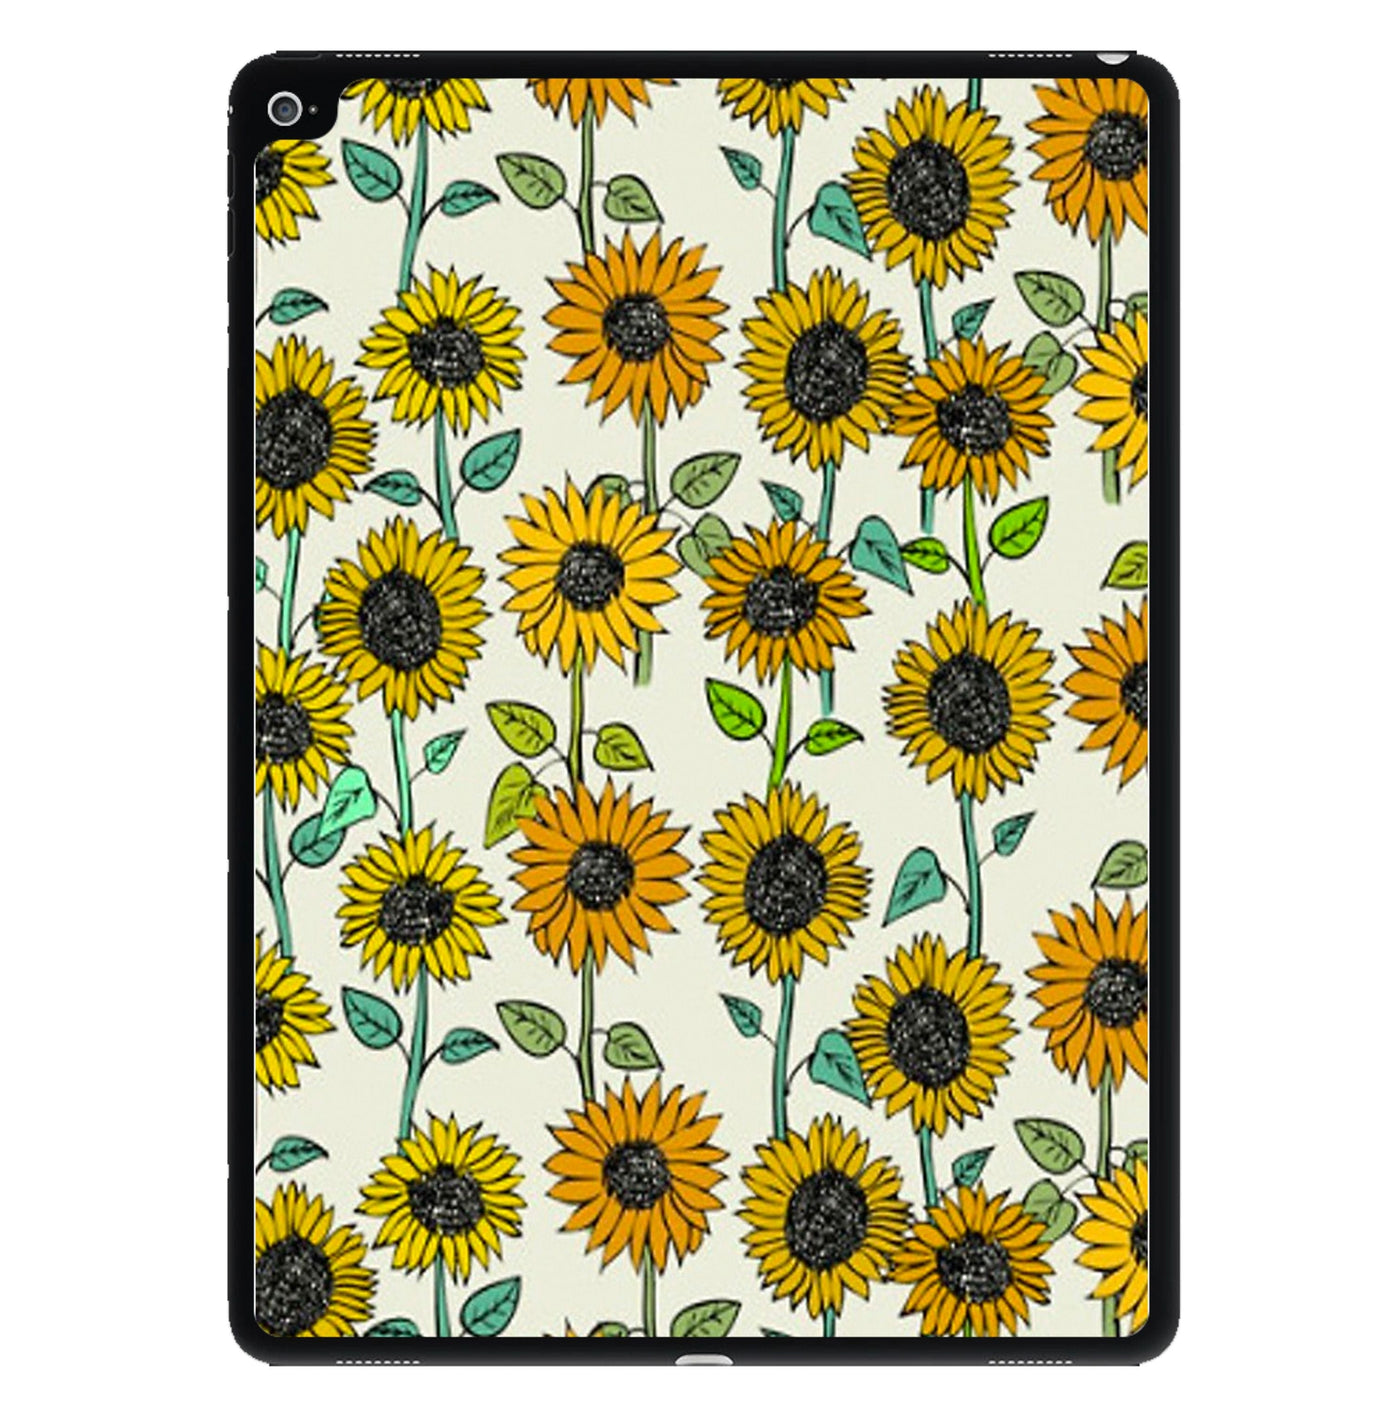 Painted Sunflowers iPad Case